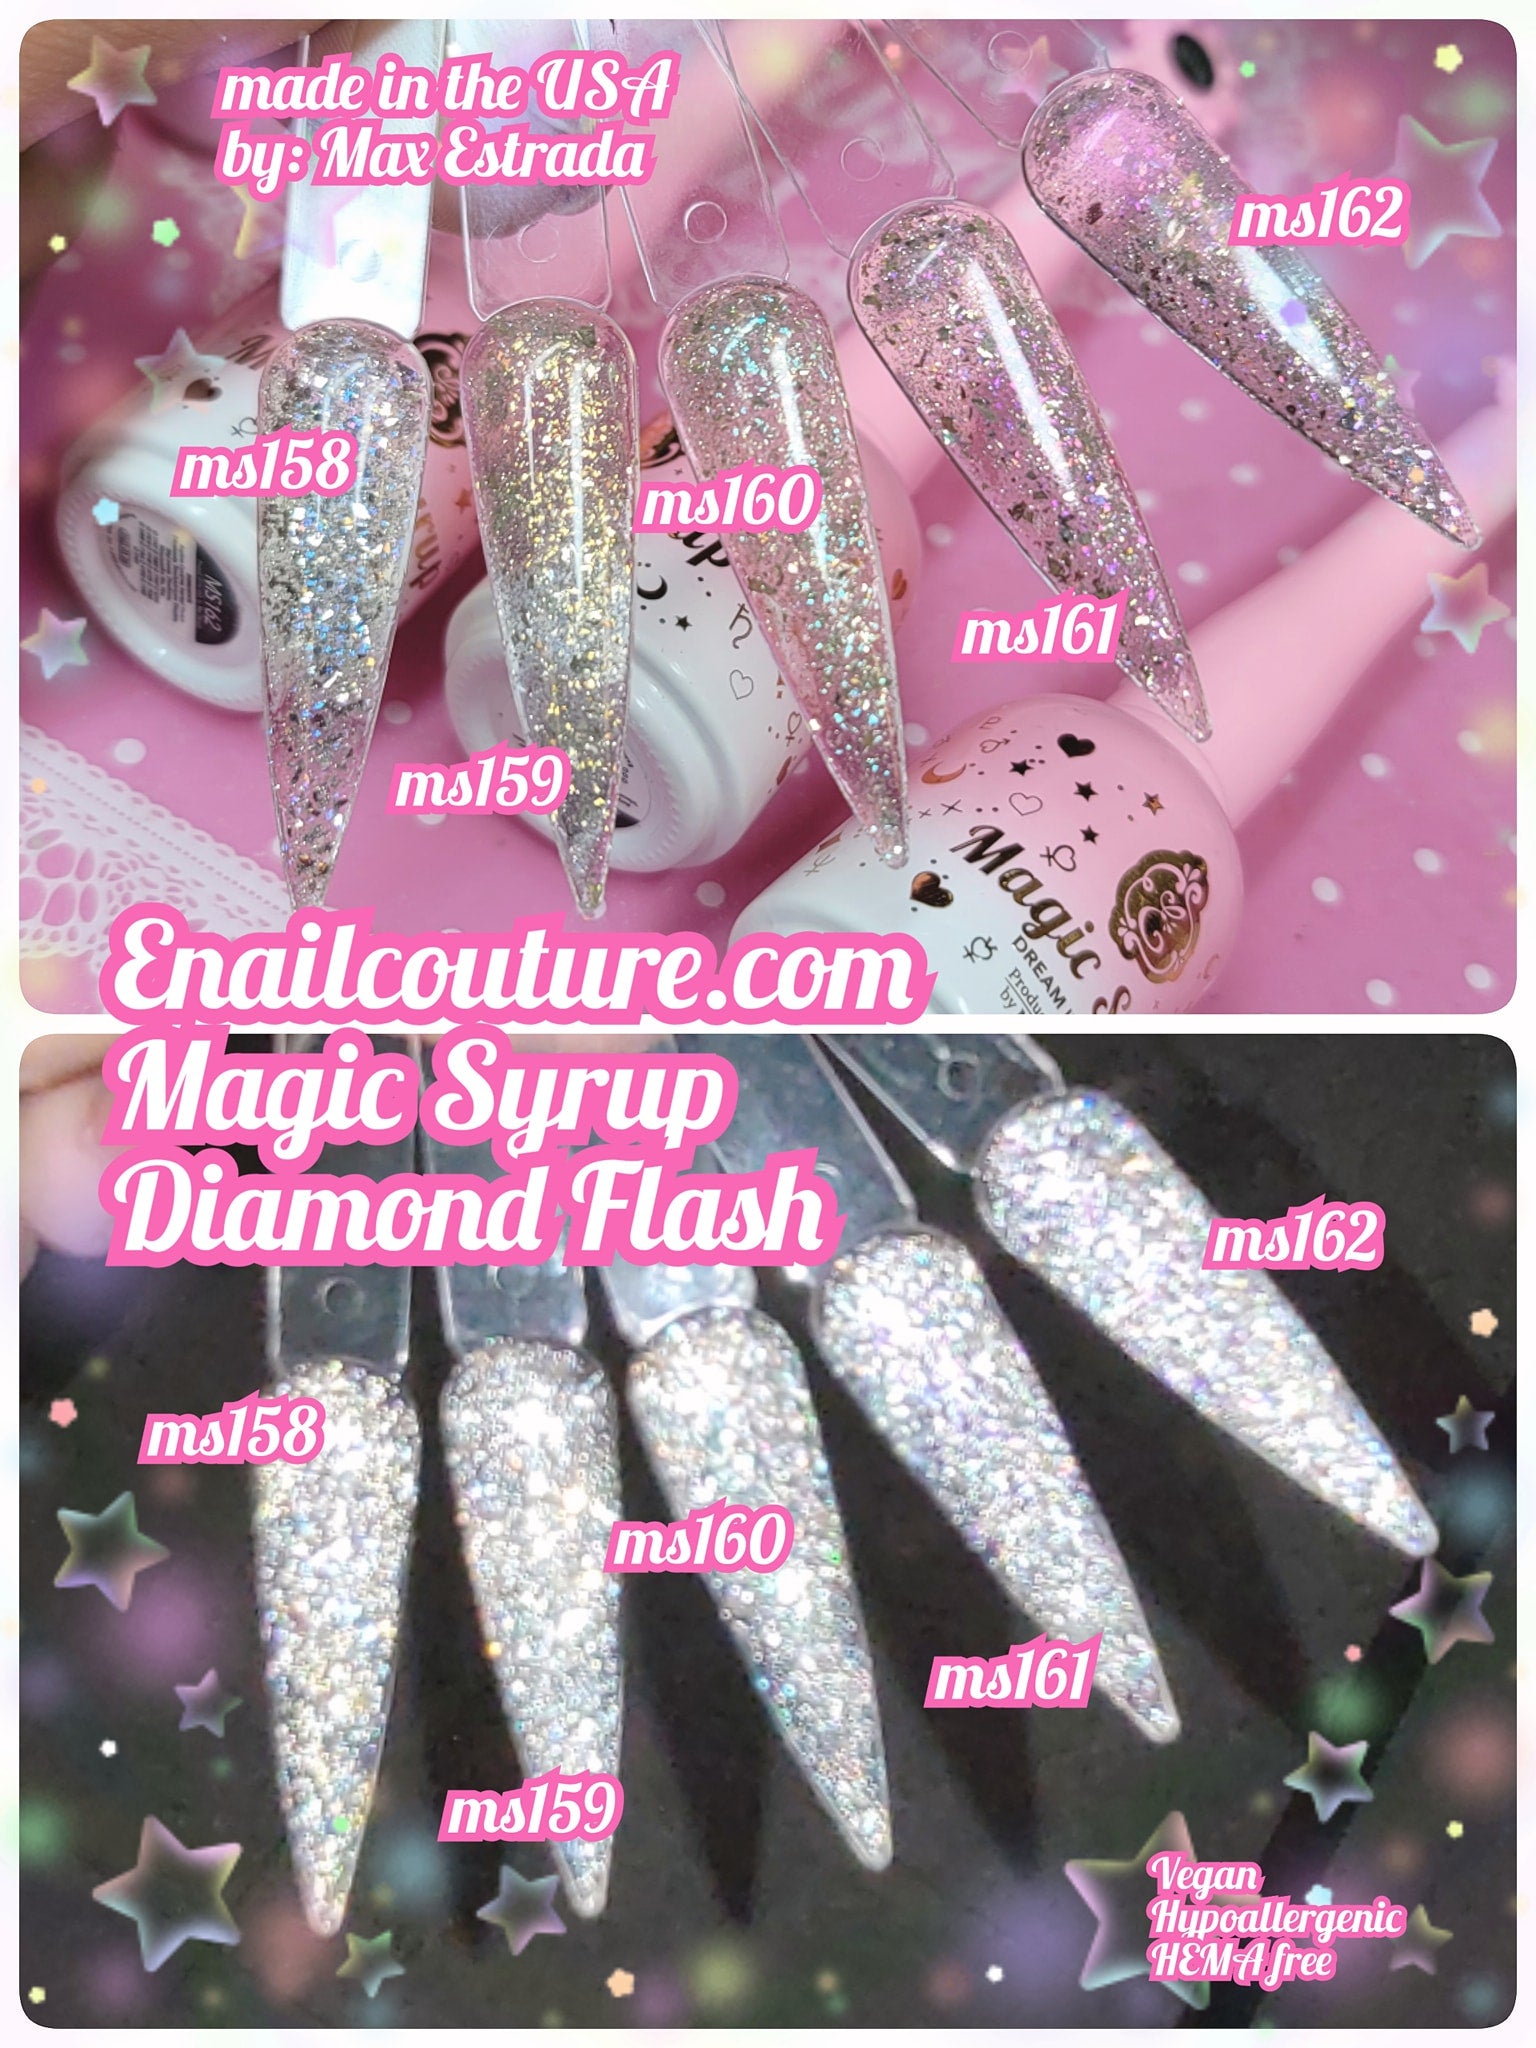 Fantasia stone diamonds set (nail art rhinestones Nail Stones Gems for